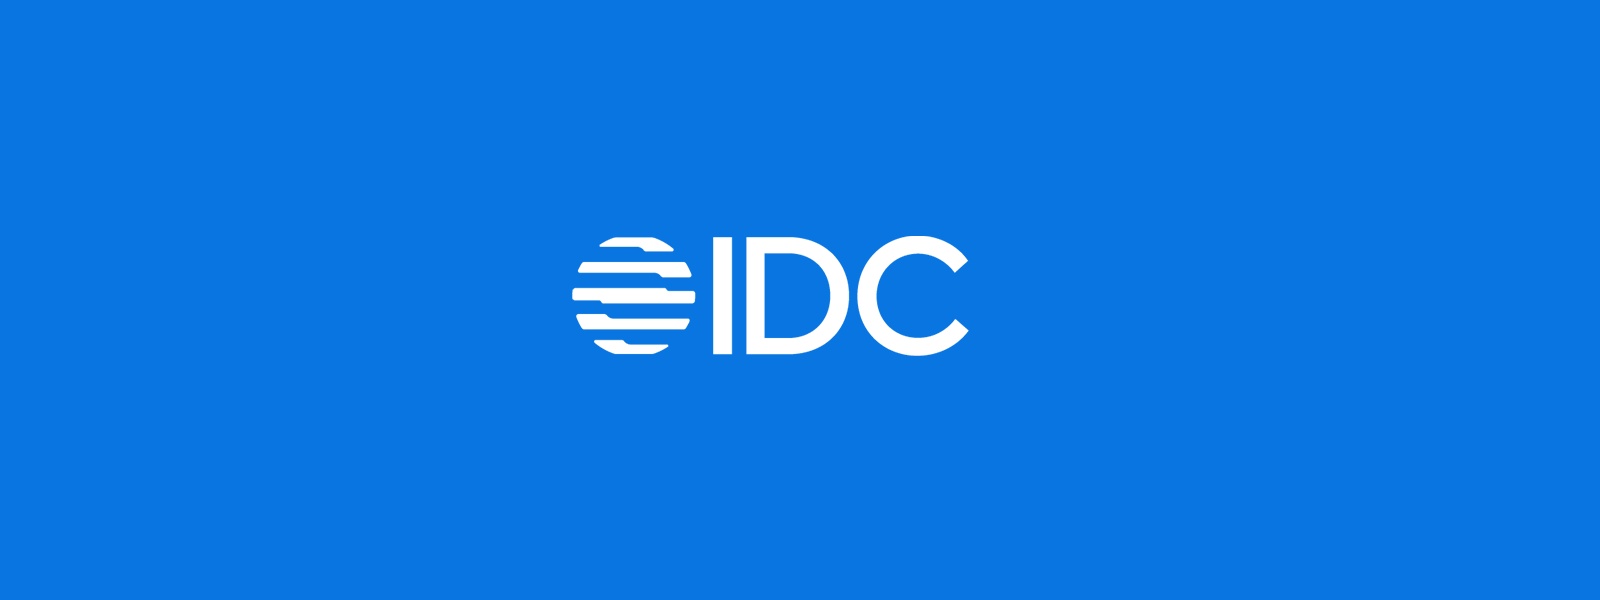 IDC logo blue background